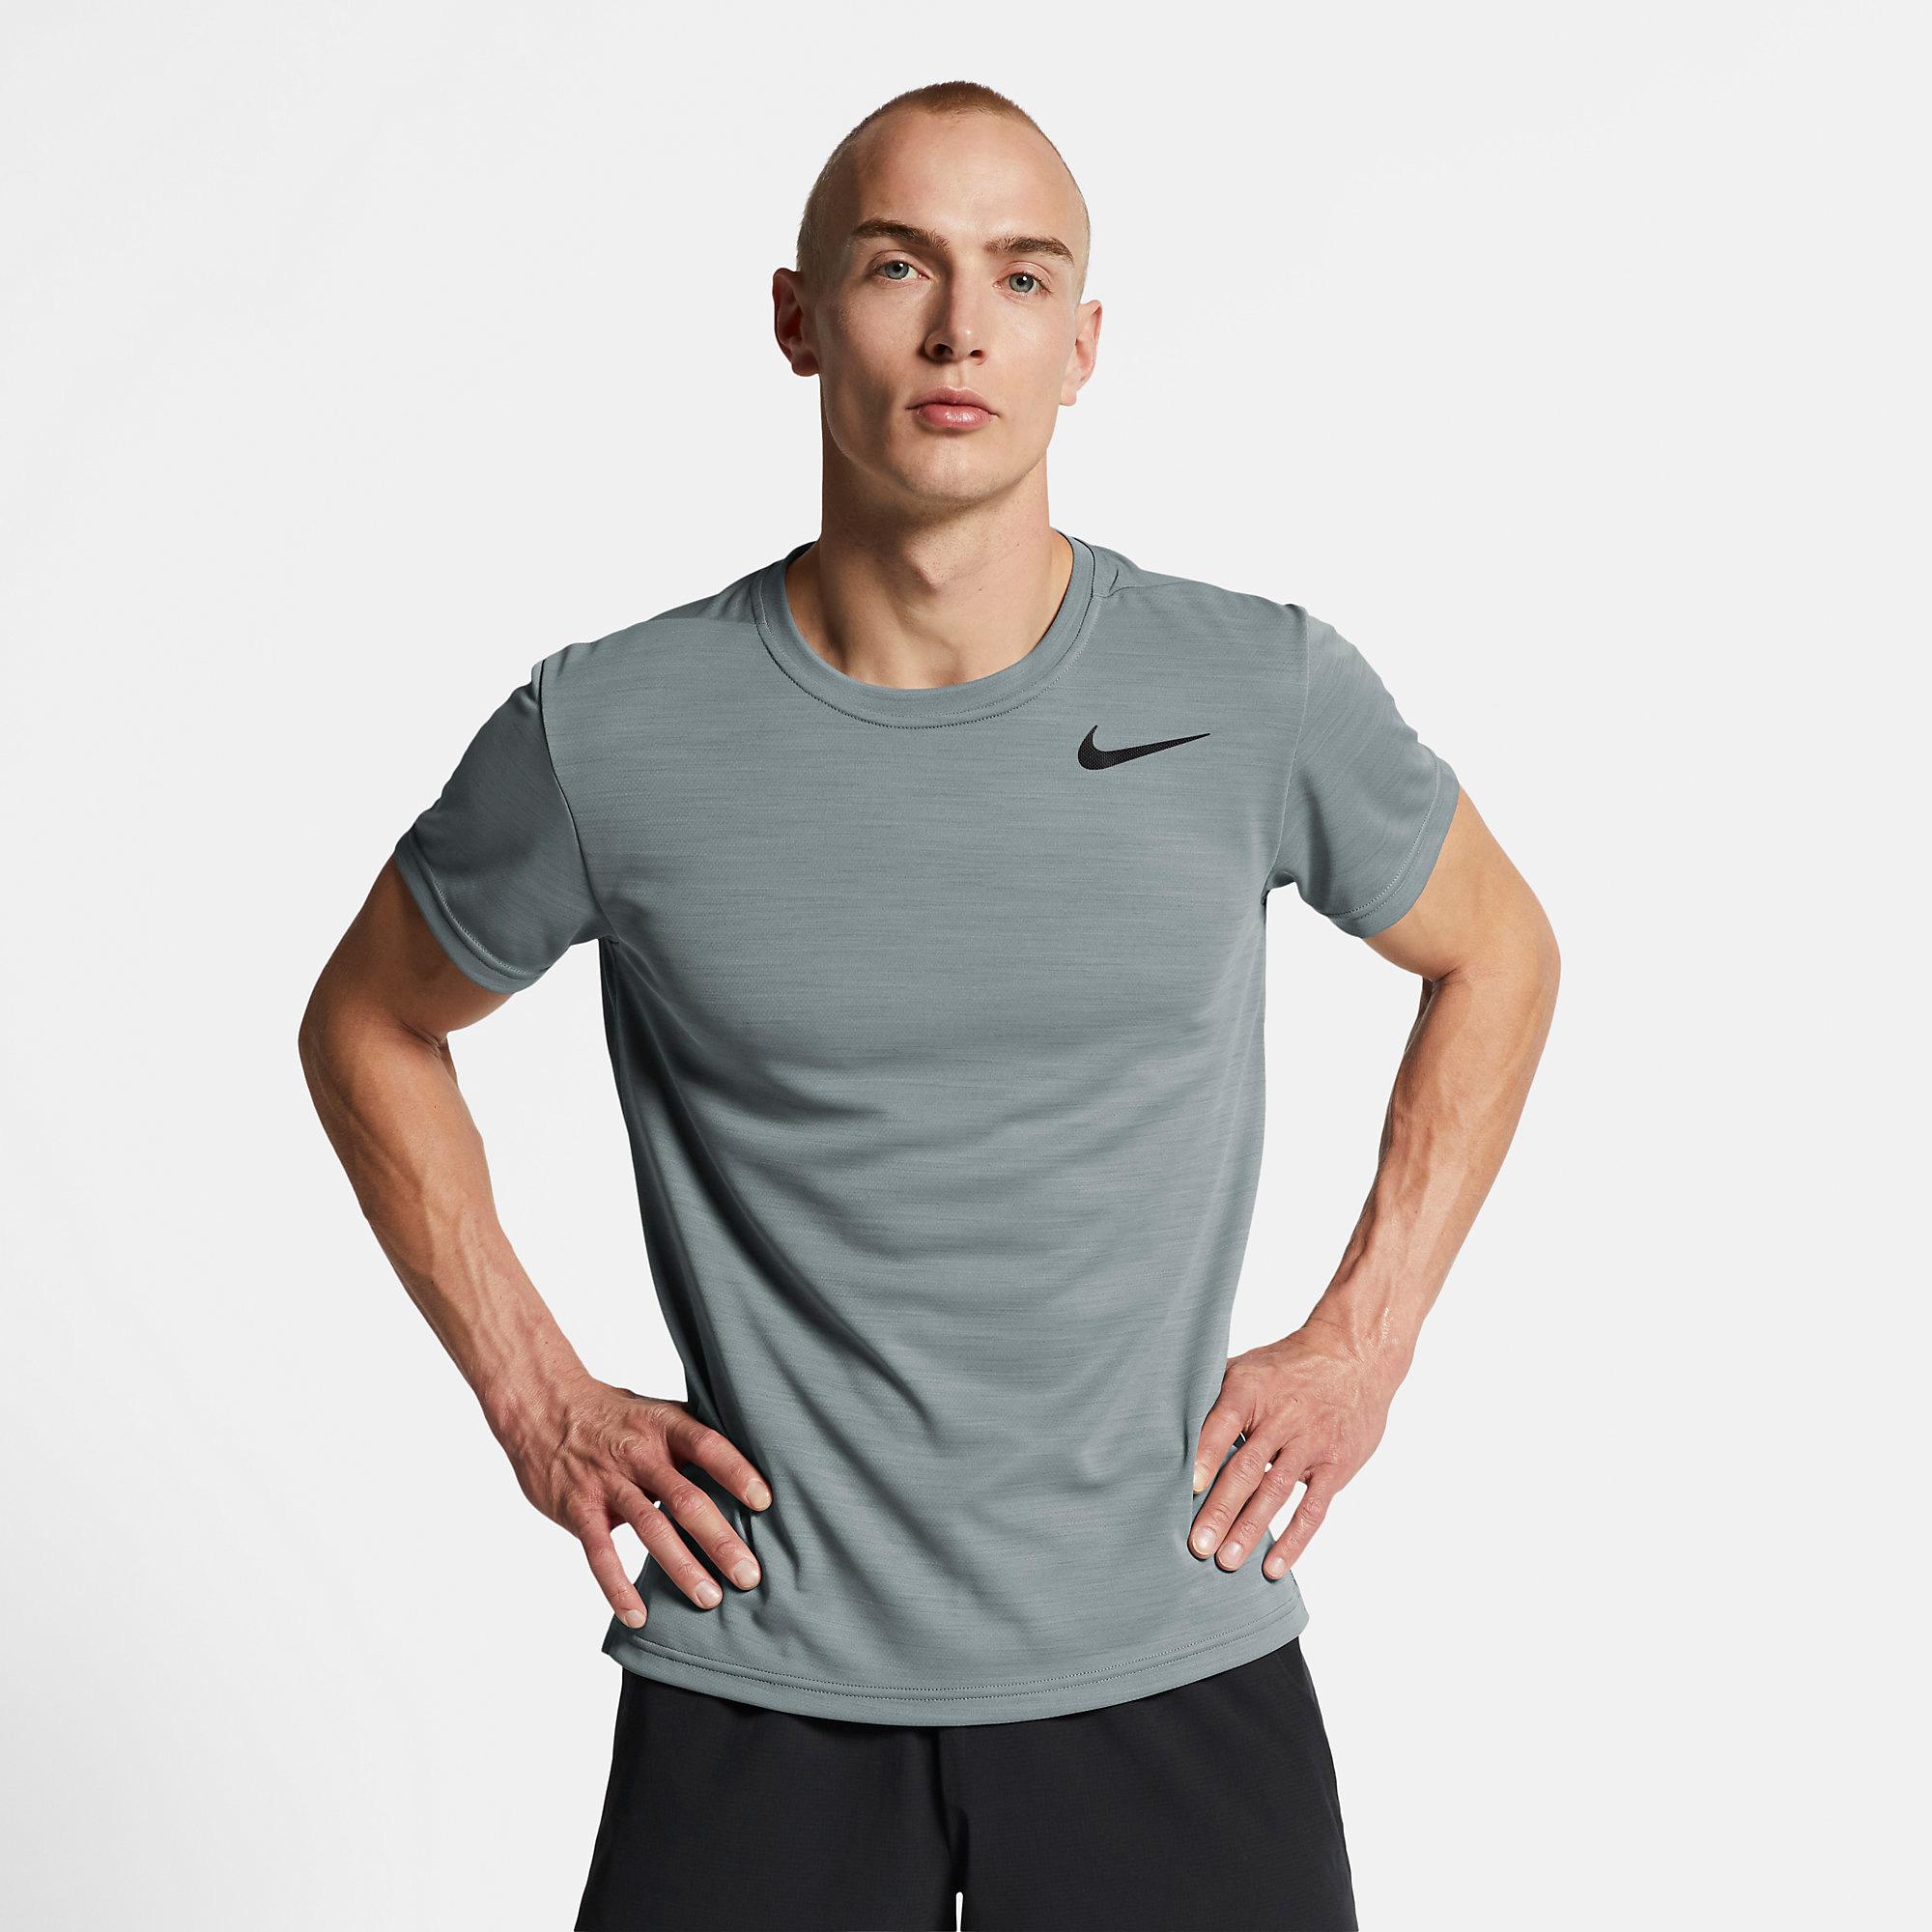 Nike Mens Superset Training Top - Grey 